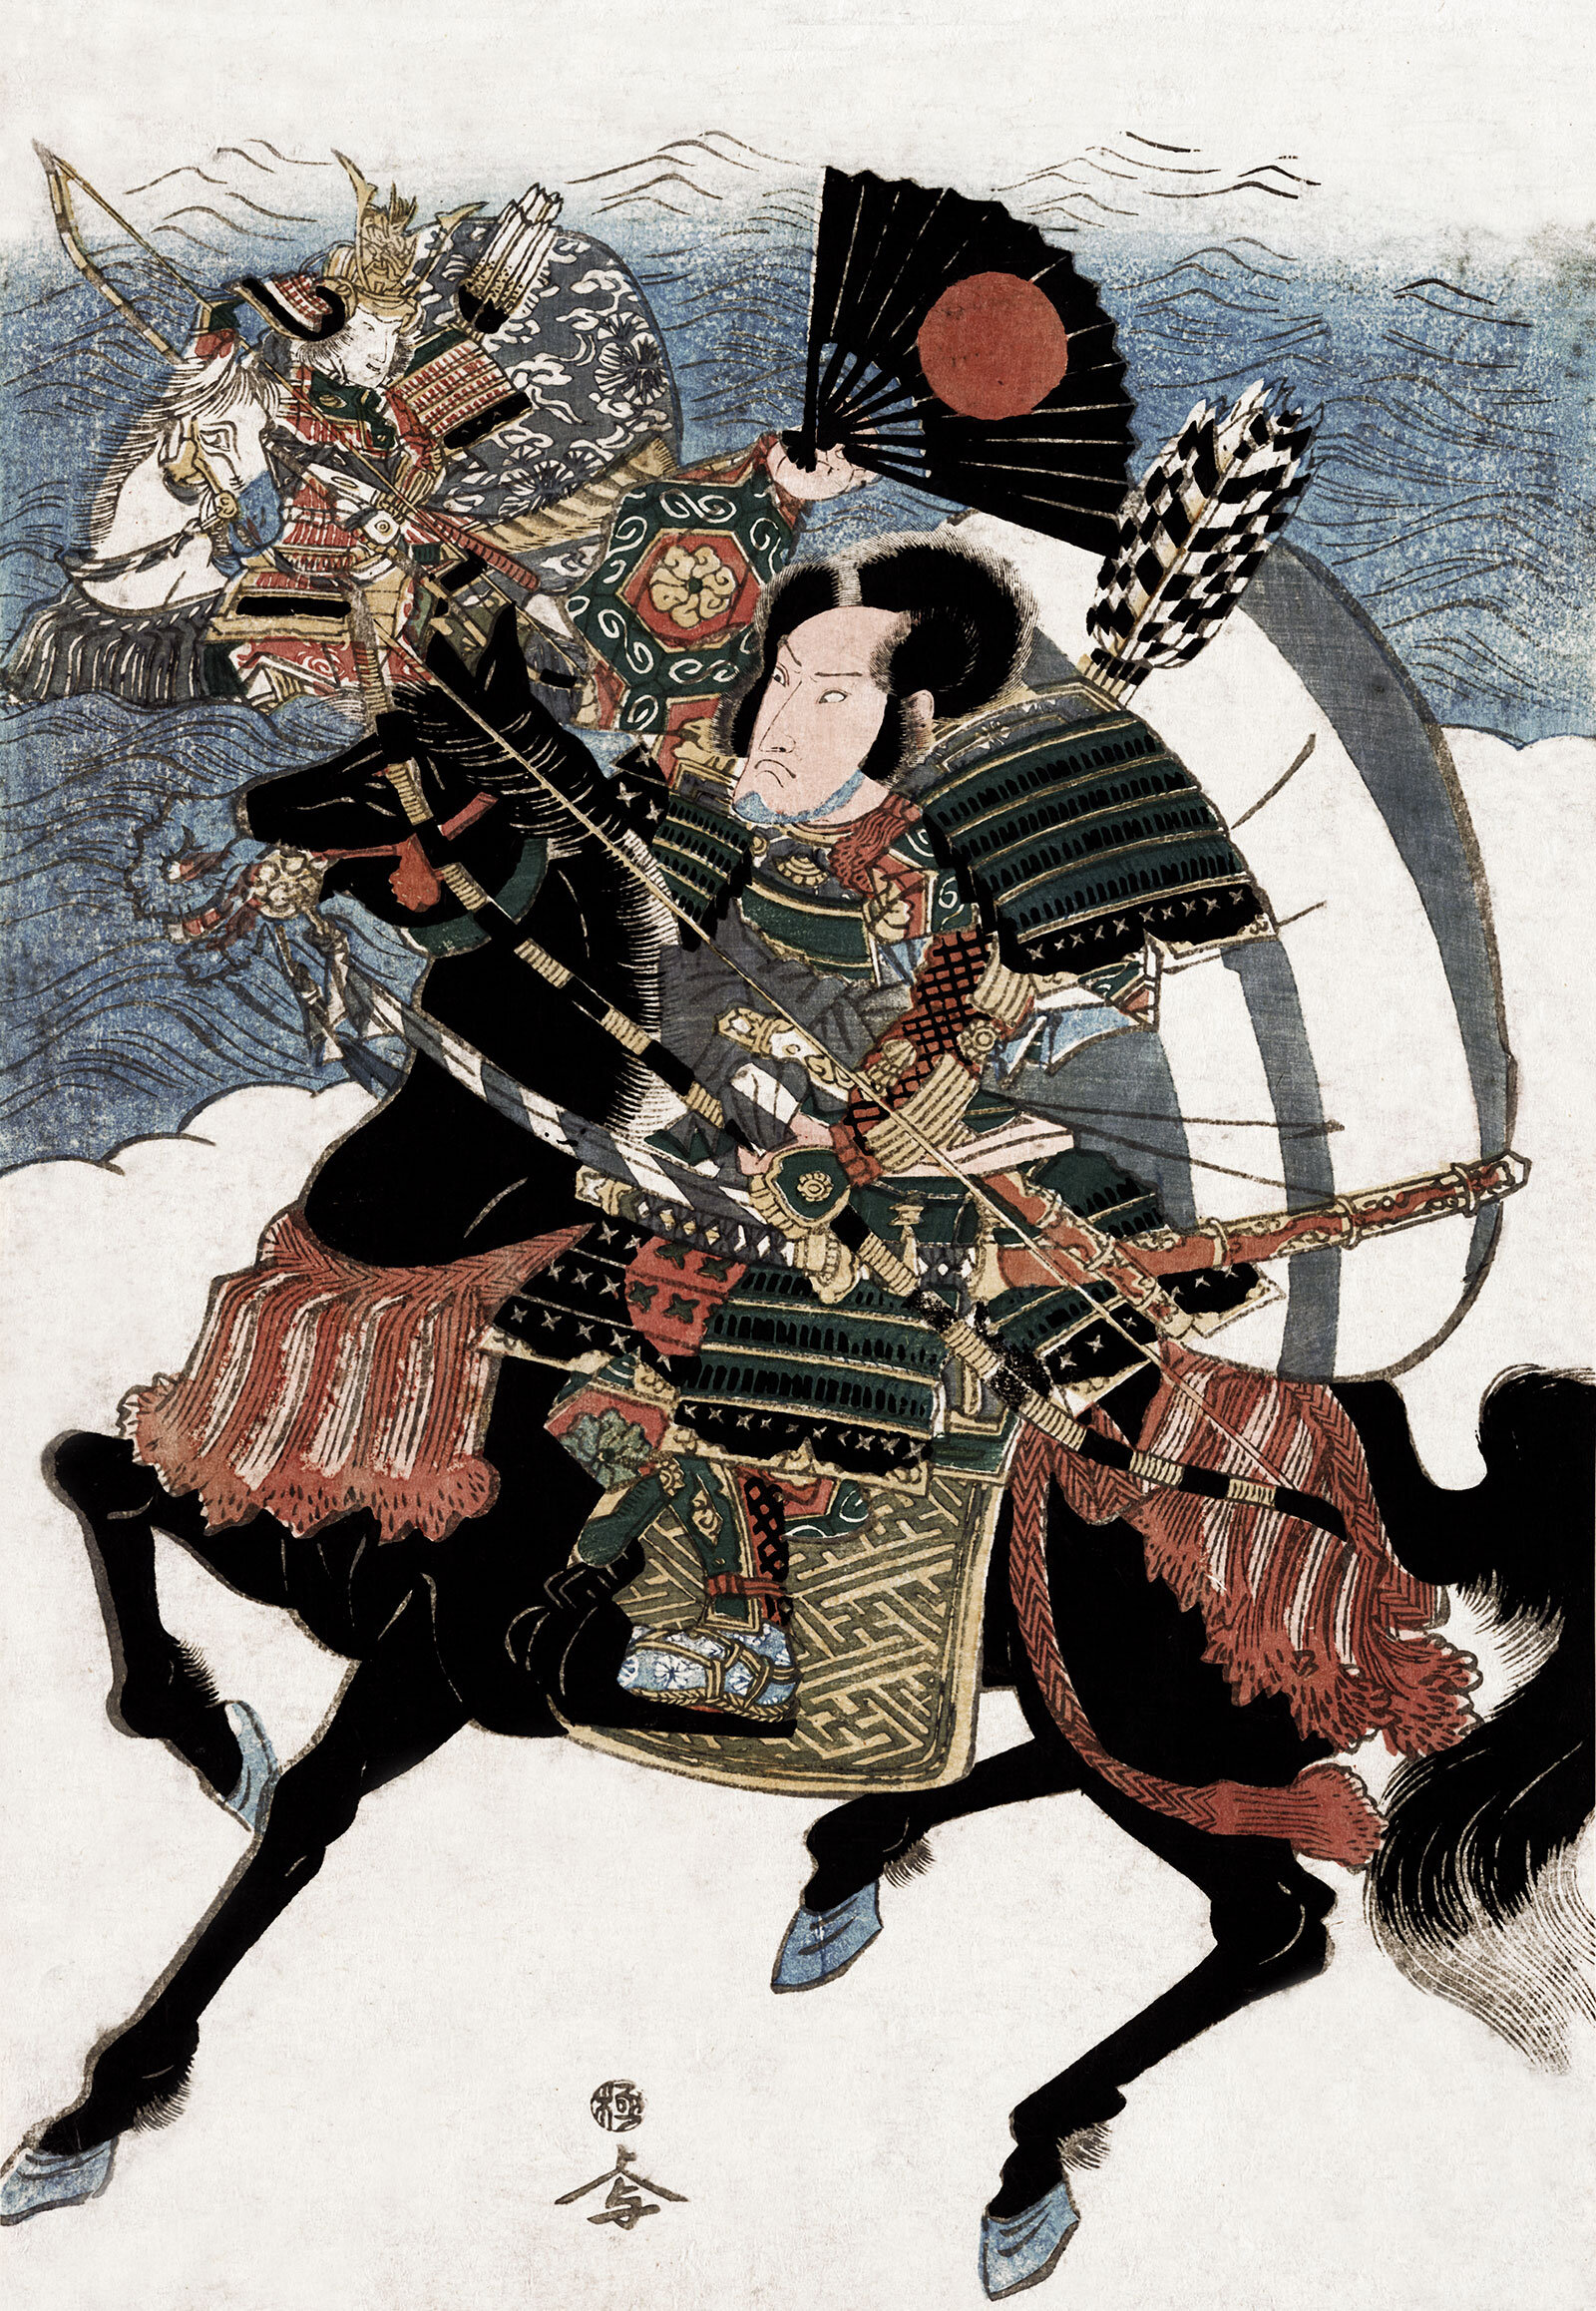 Is the shogun the leader of the samurai?